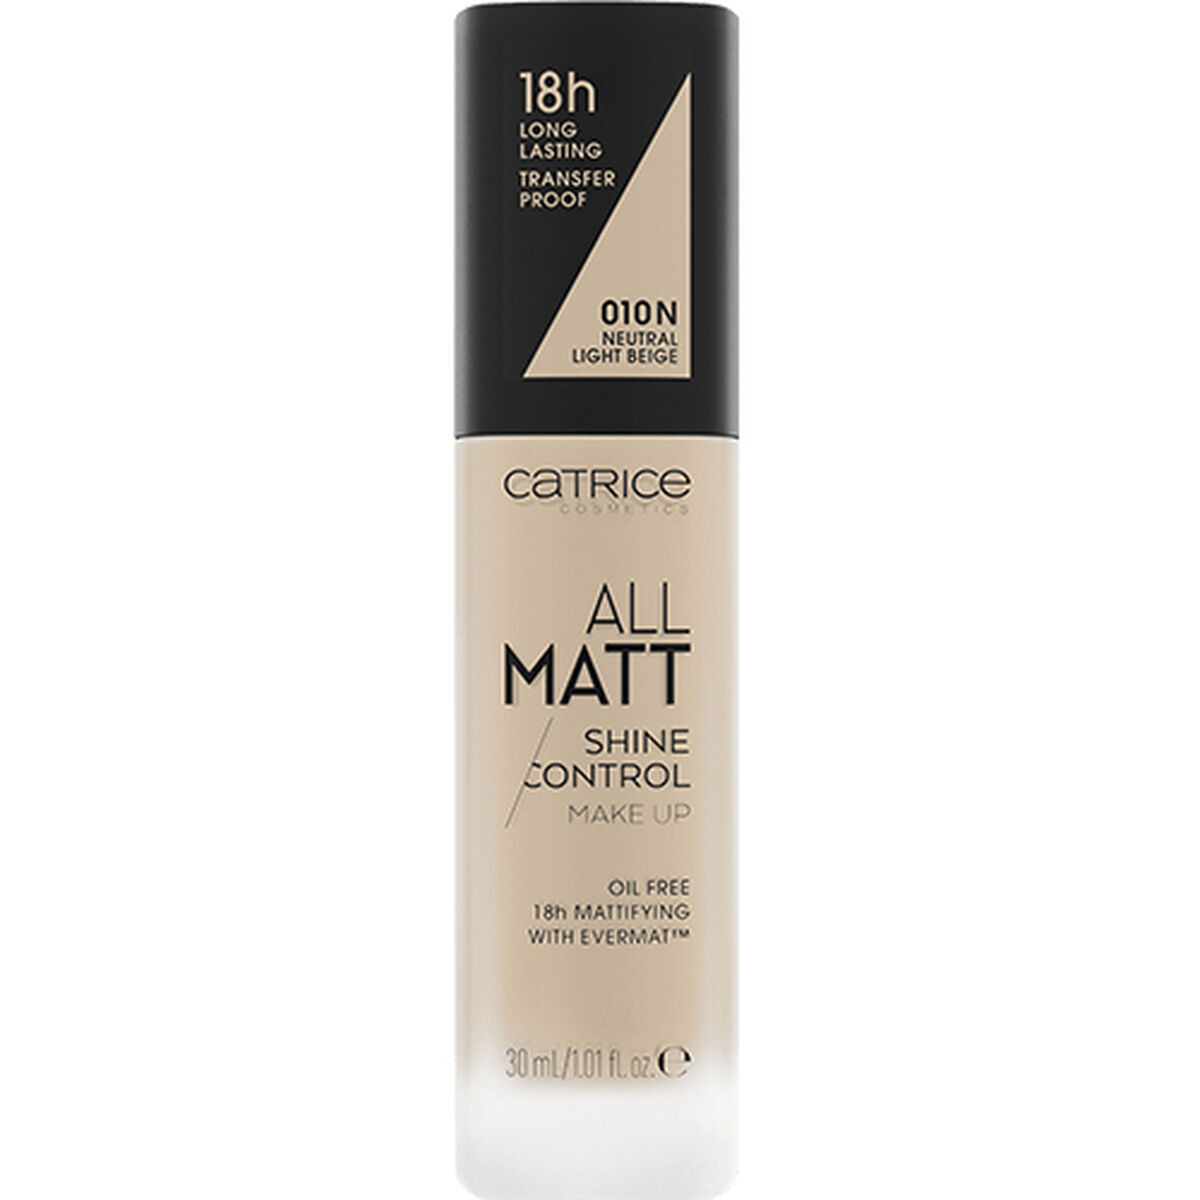 Base de maquillage liquide Catrice All Matt 010N-neutral light beige (30 ml)